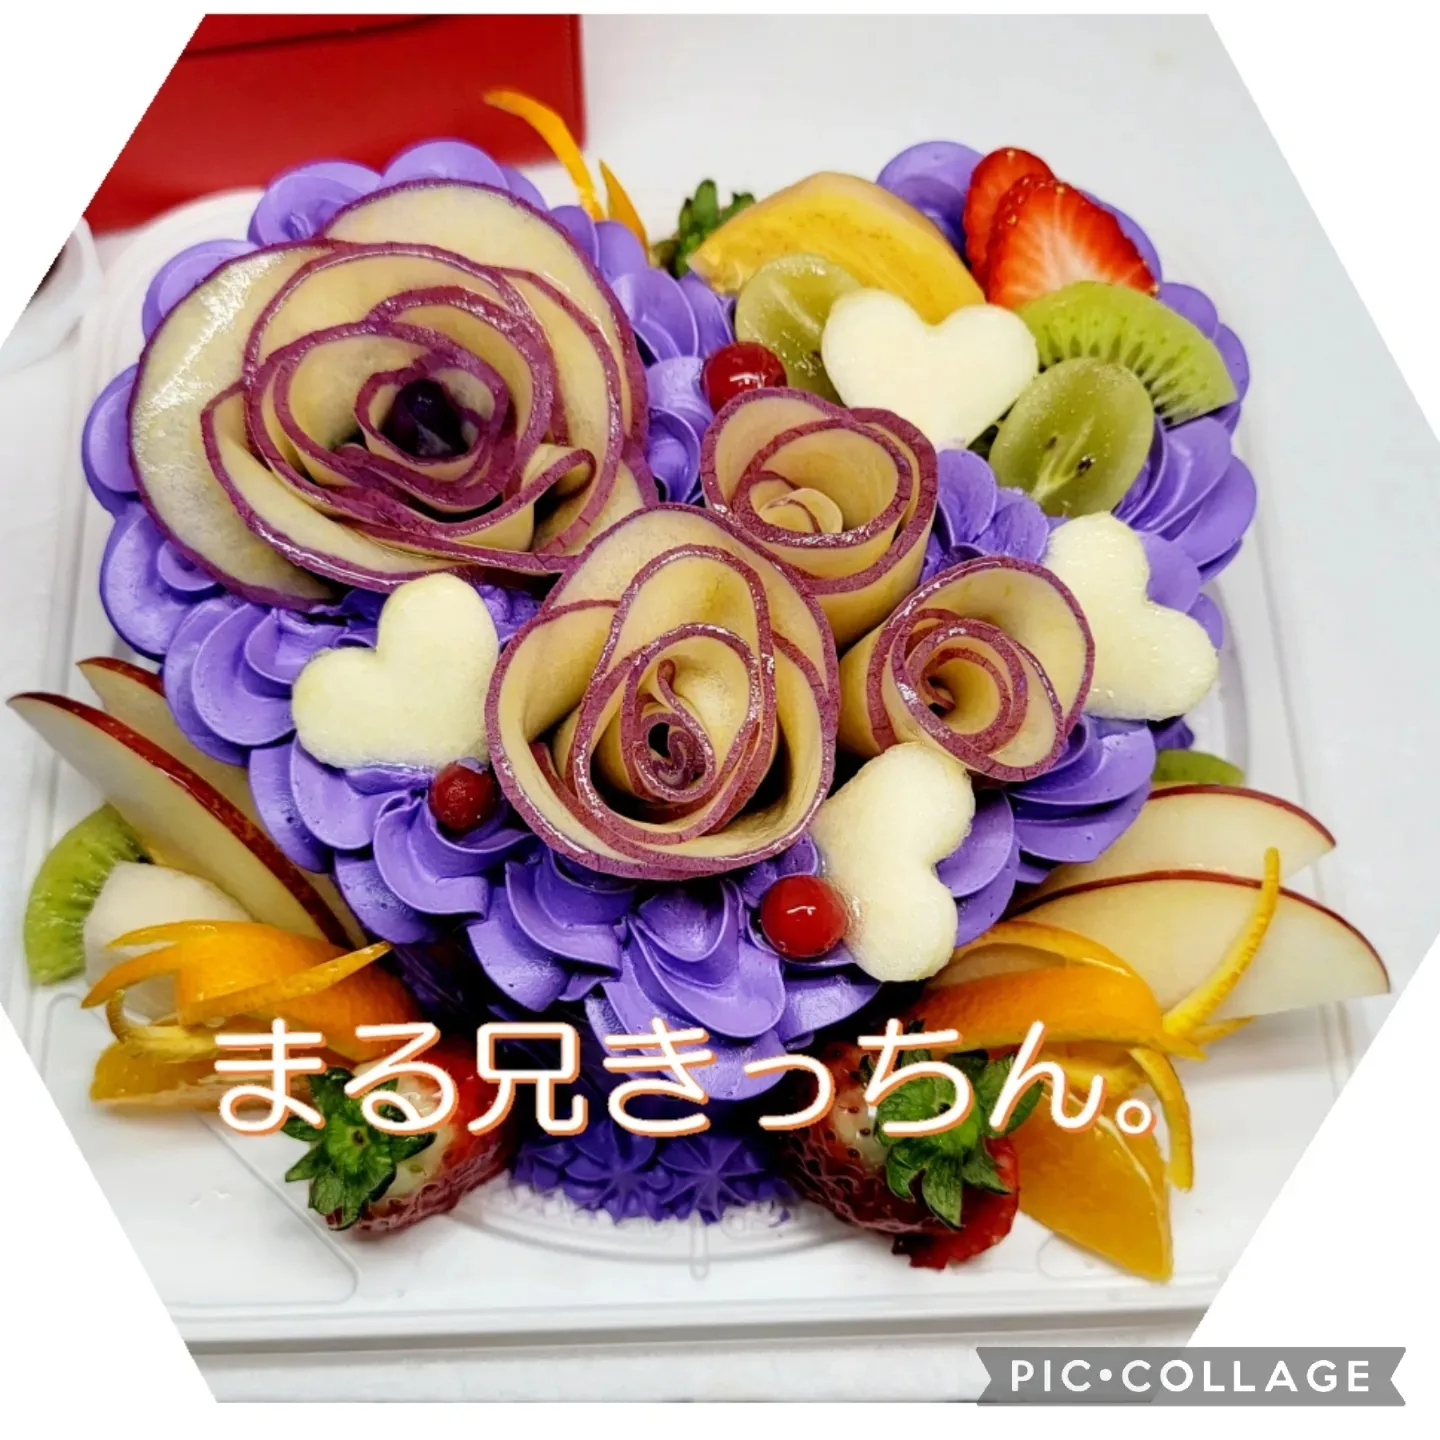 ○ Flowerちん♡ - インテリア/家具